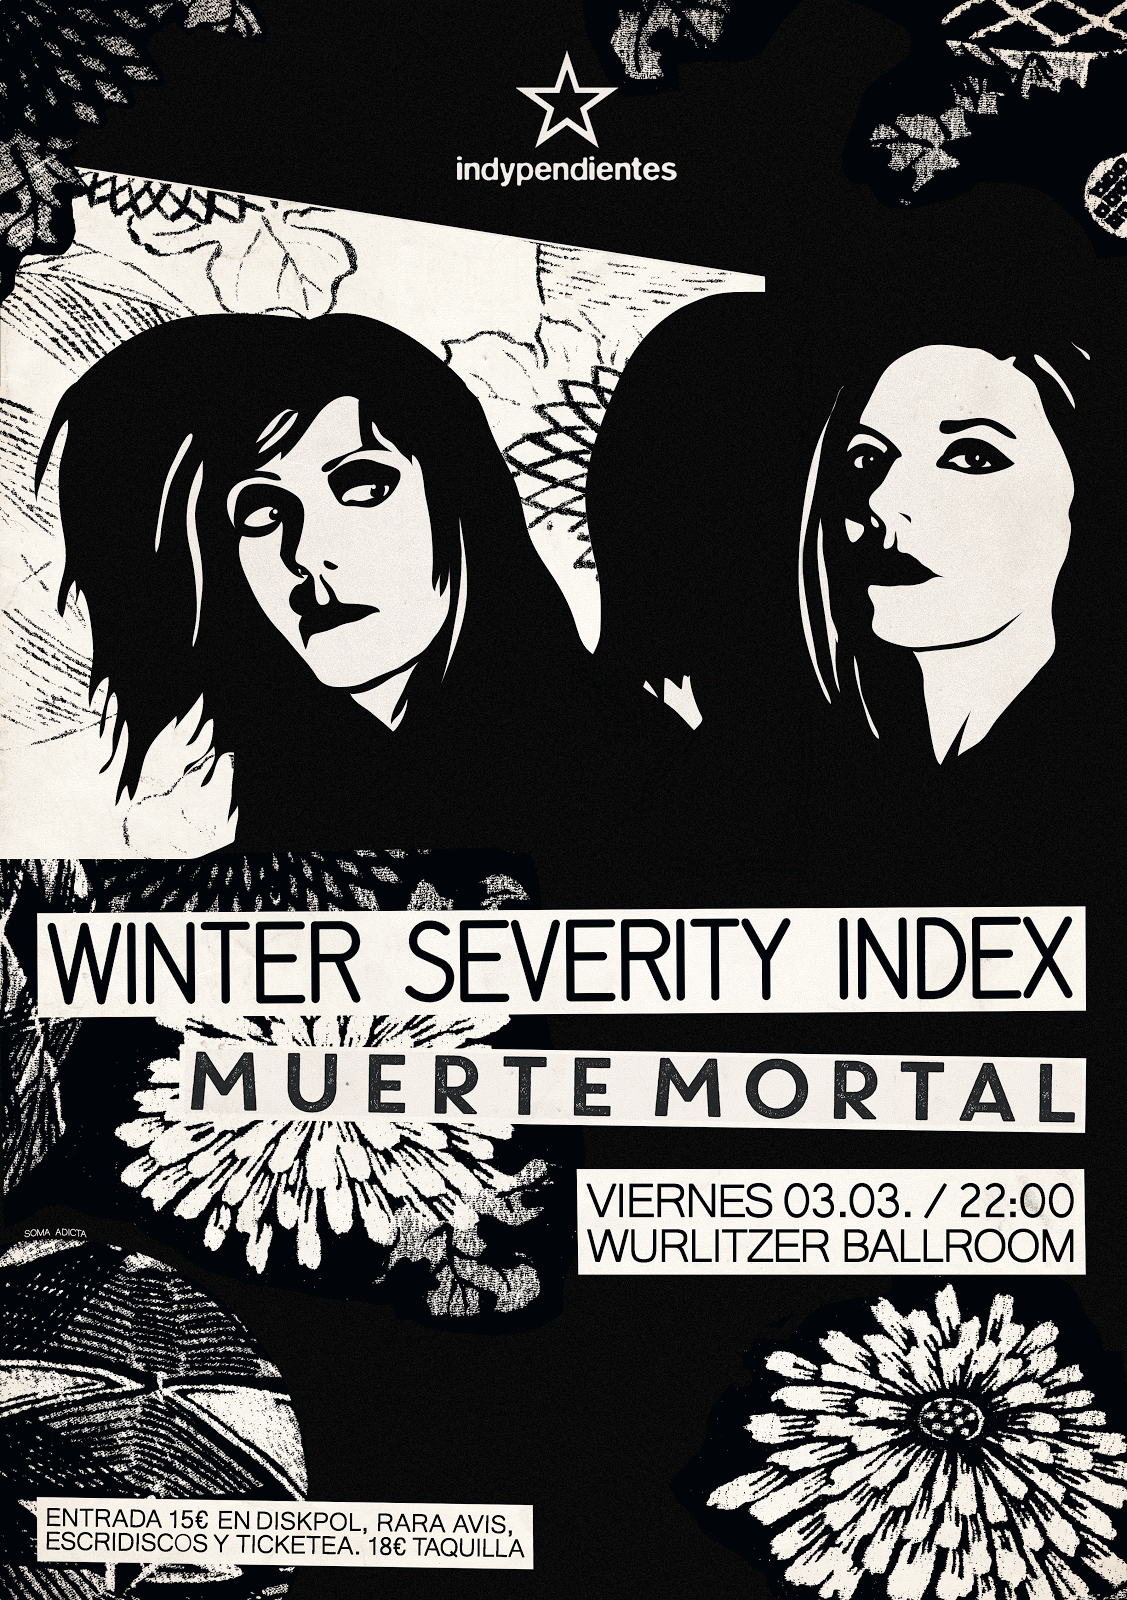 Winer Severity Index + Muerte Mortal